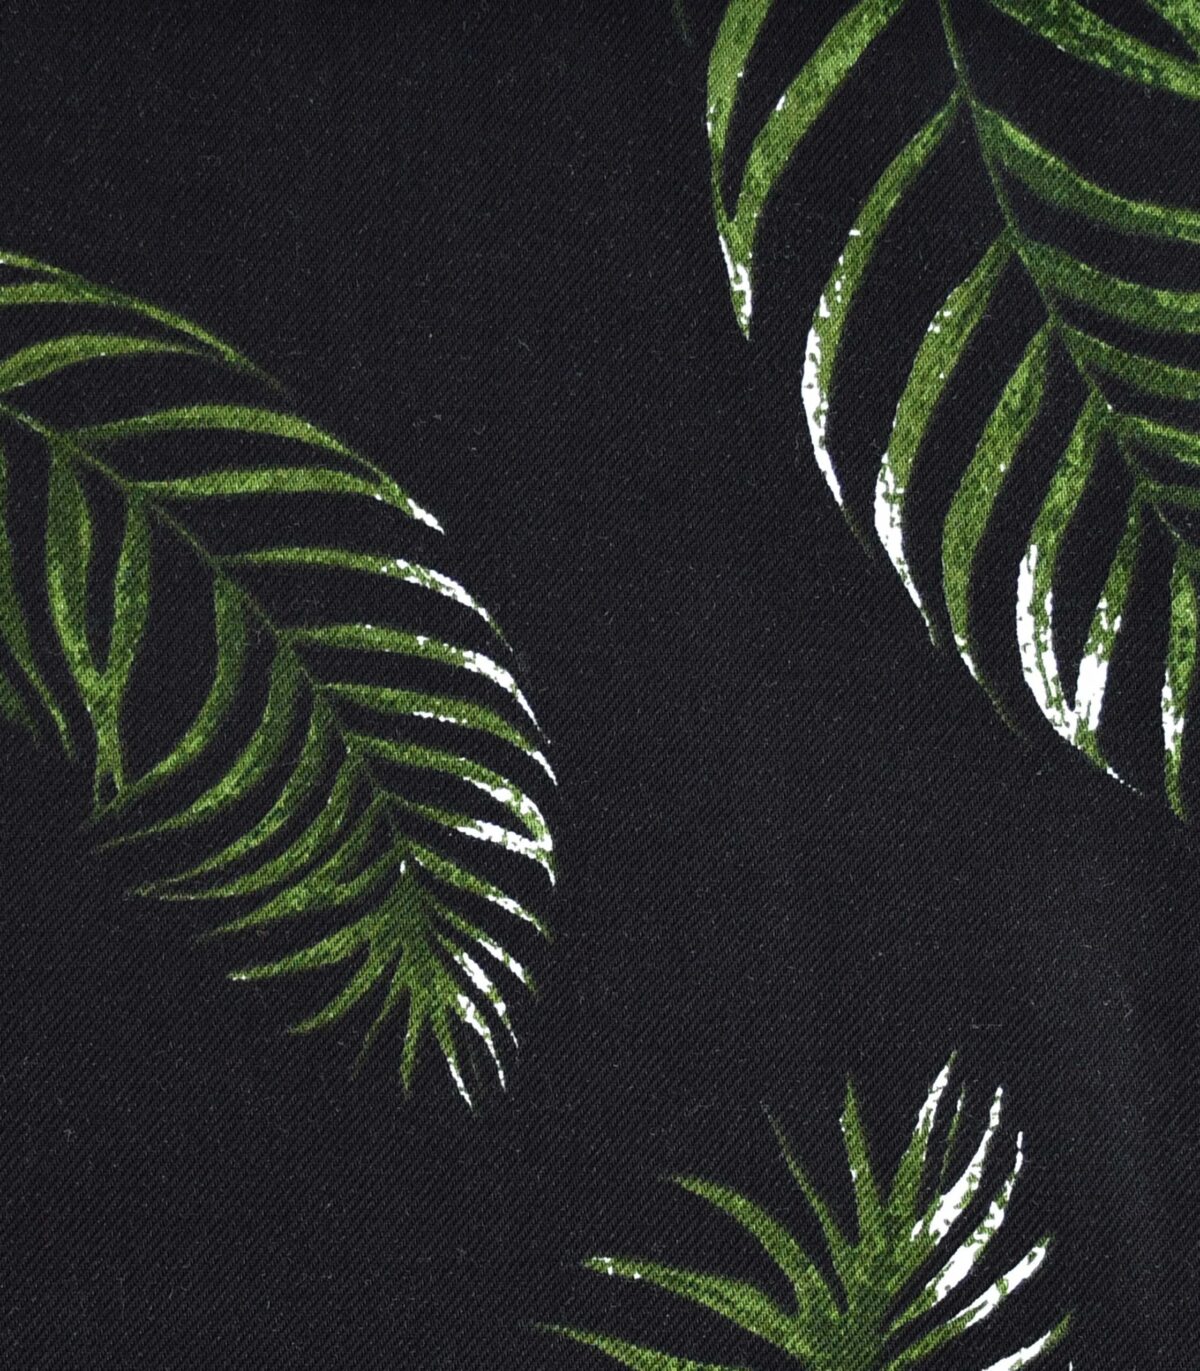 Viscose Green Color Leaf Print Fabric